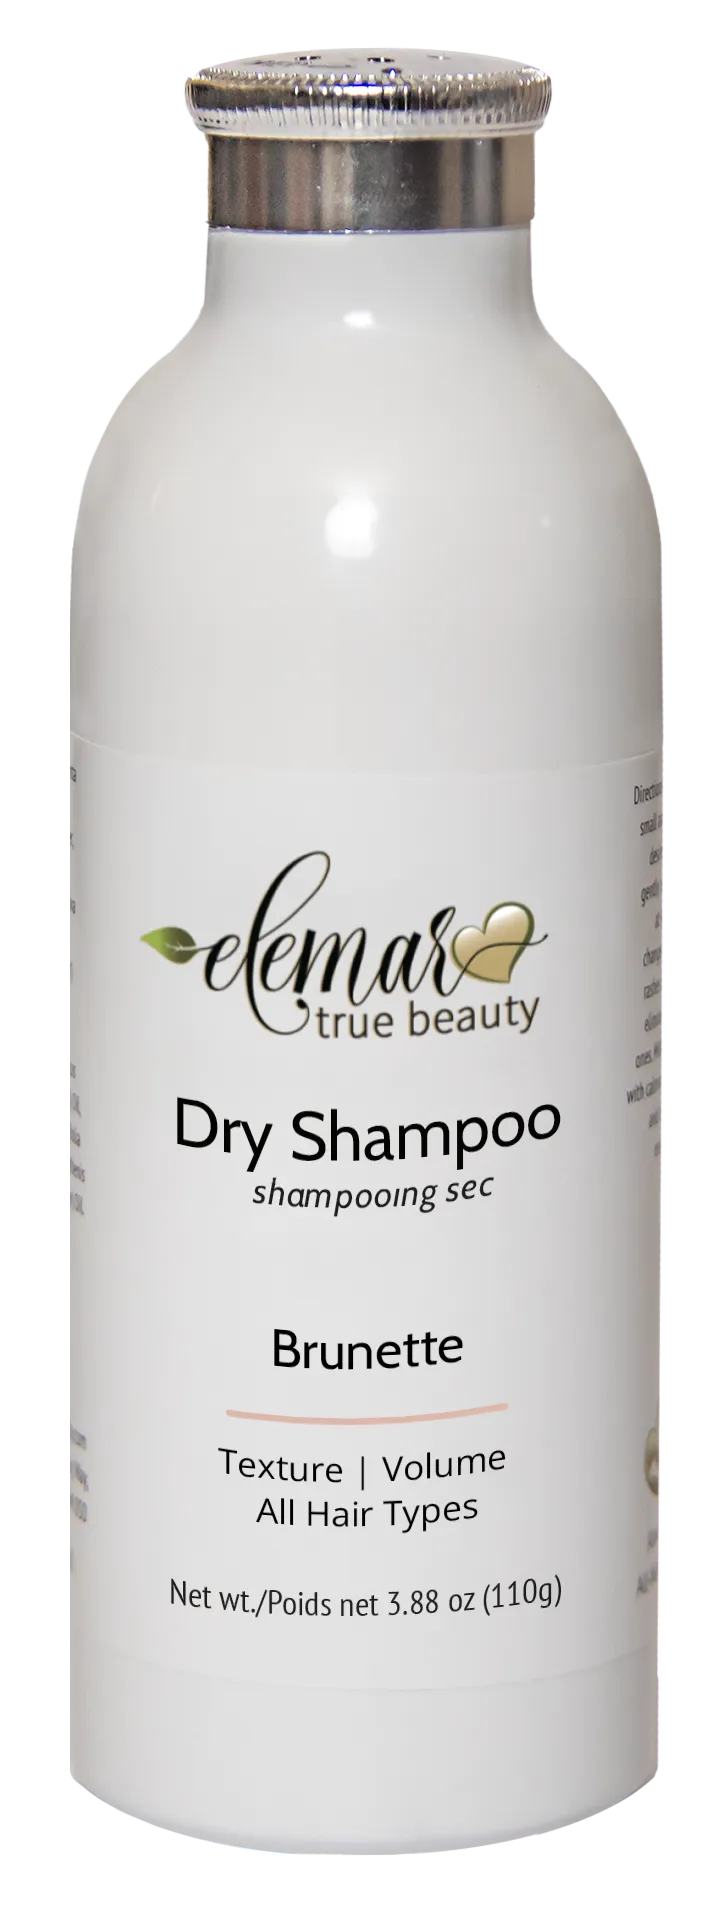 Dry Shampoo - Blonde or Brunette